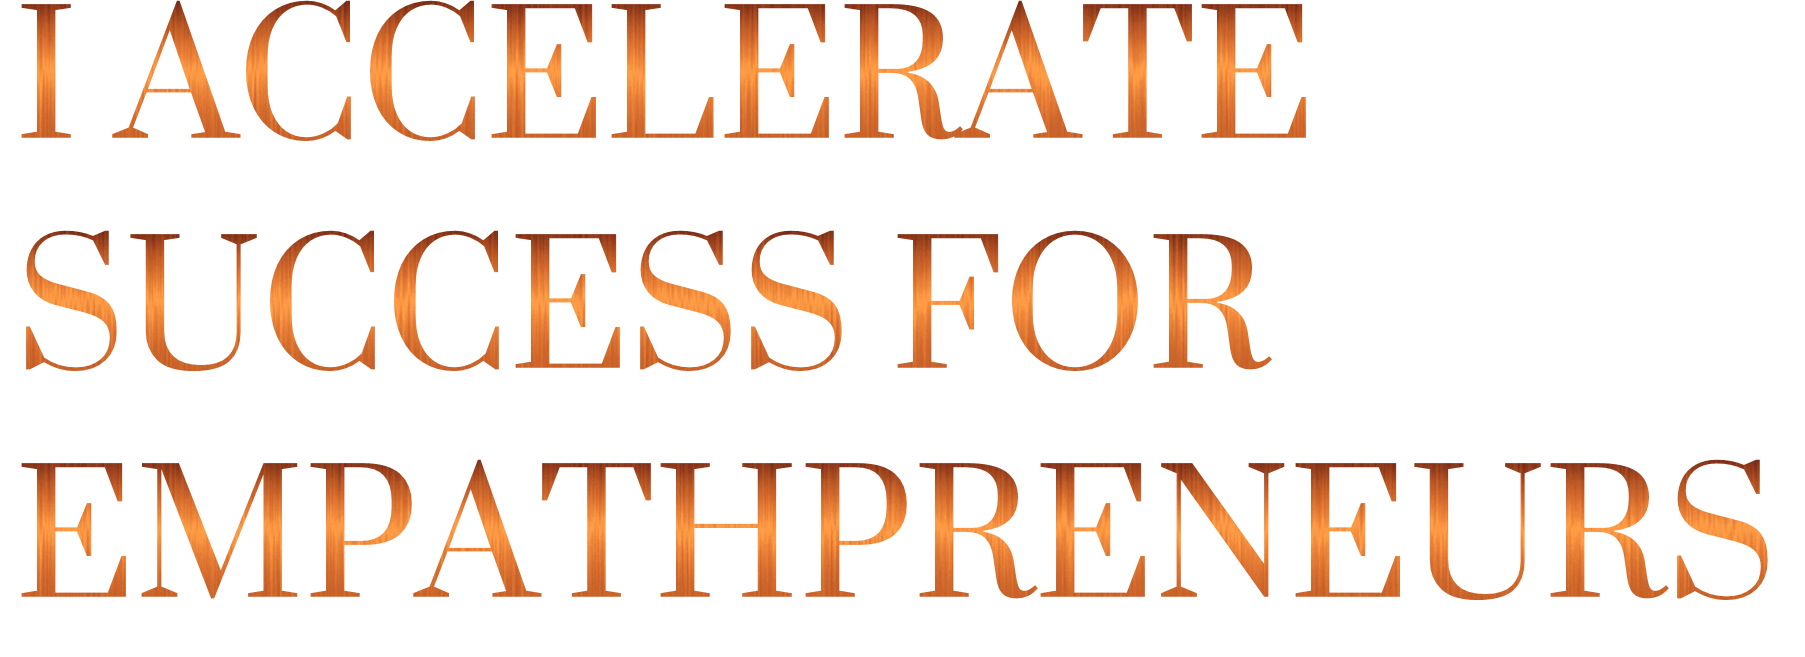 I Accelerate Success for EmpathPreneurs